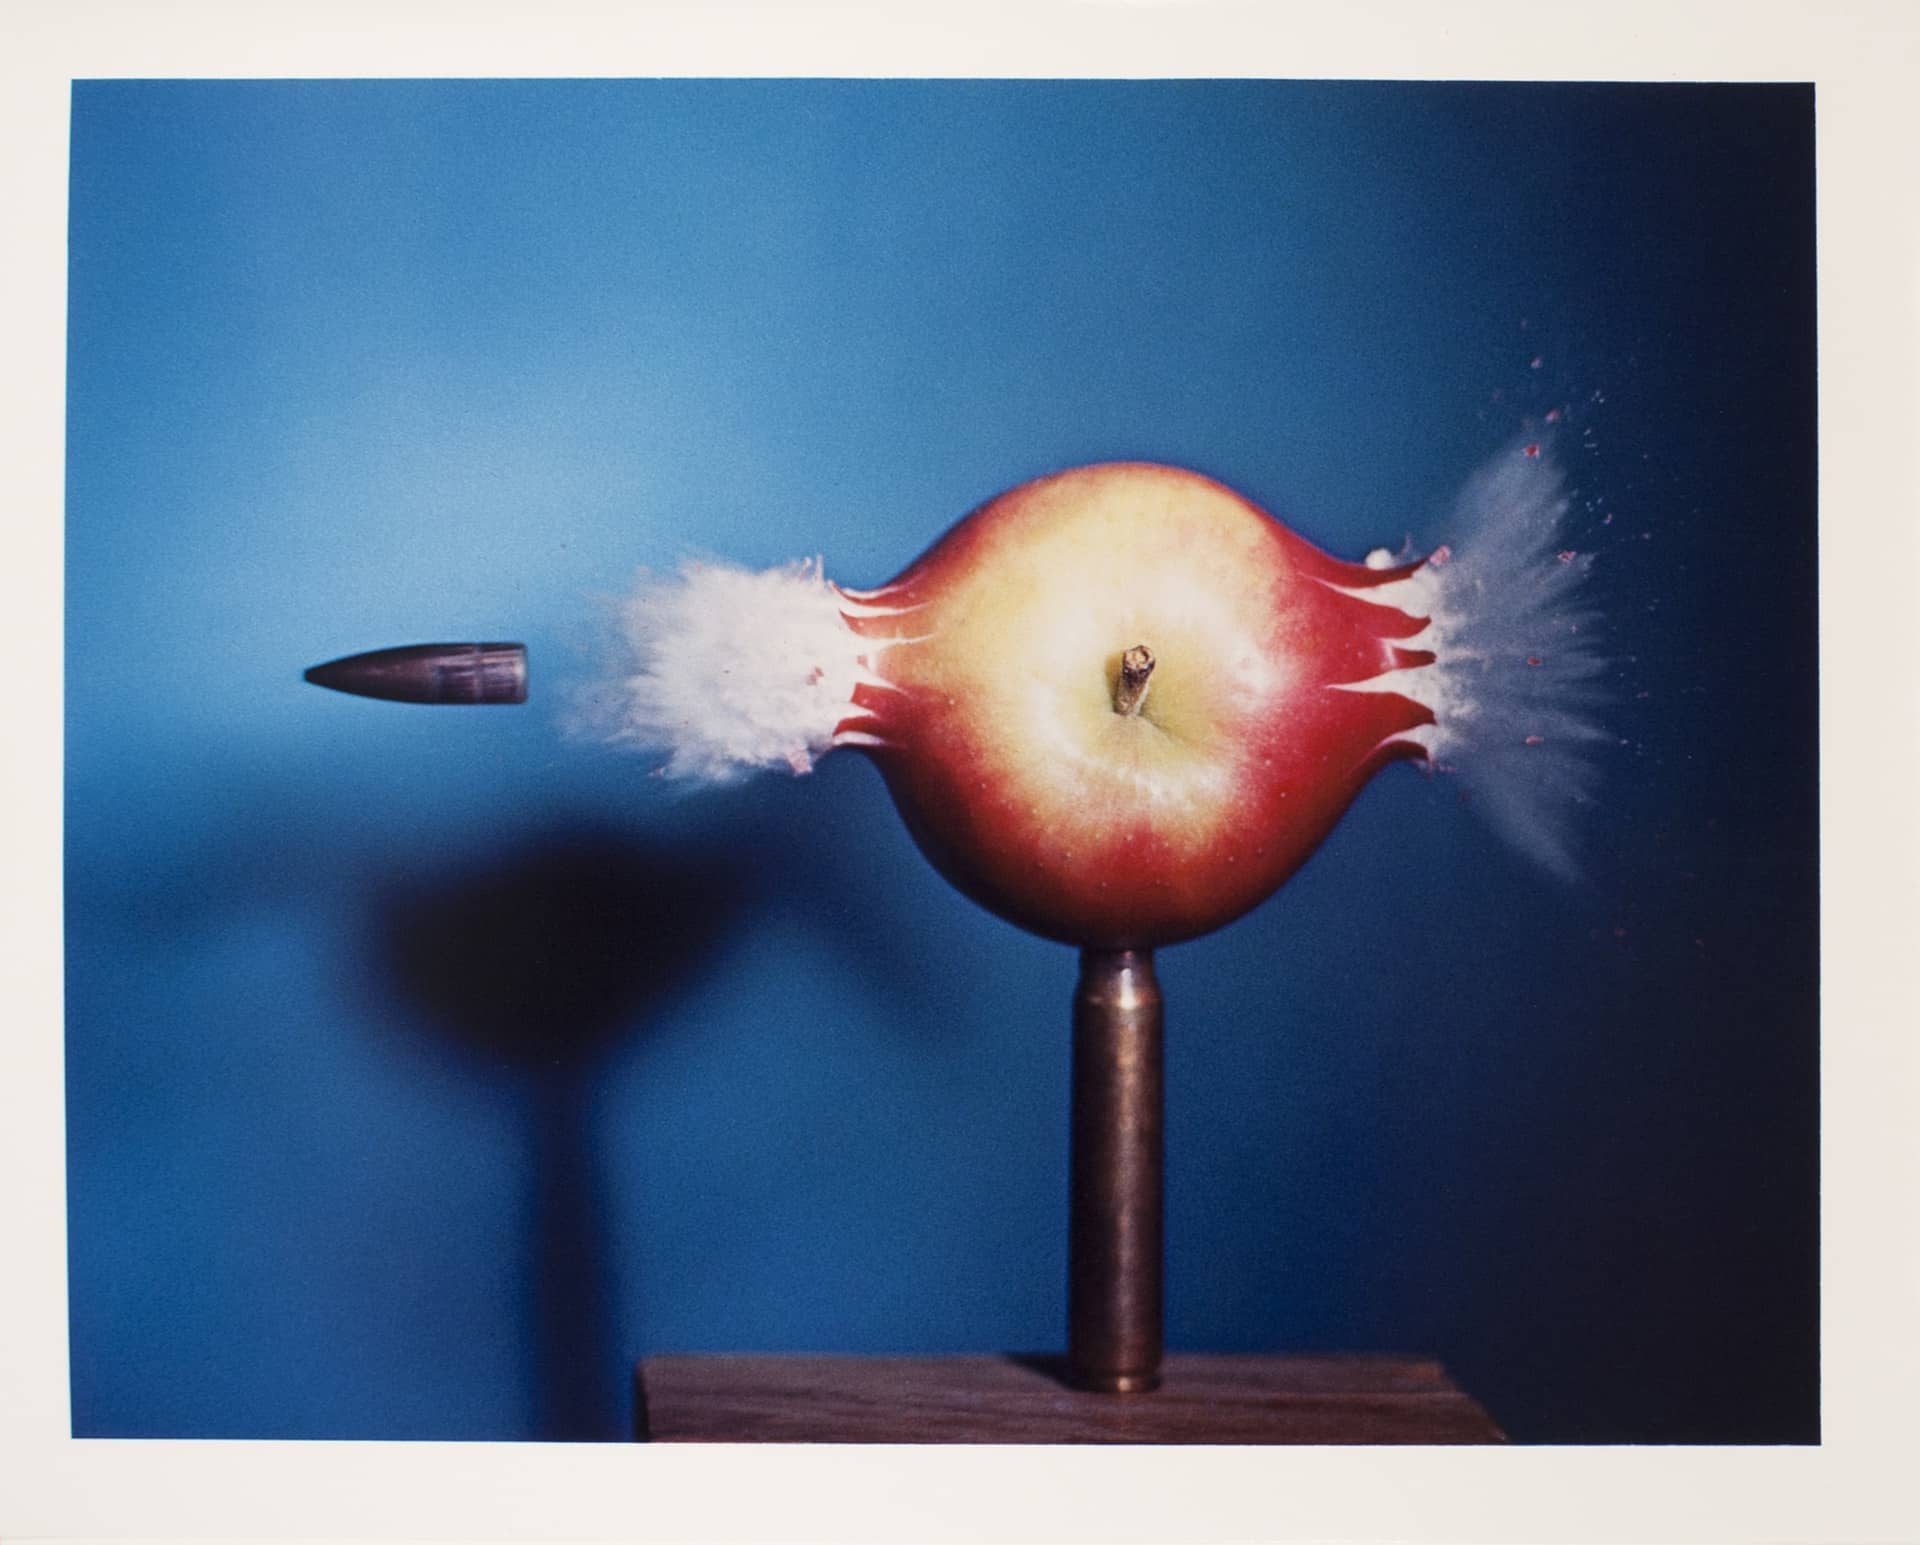 a photograph of a bullet moving through an apple